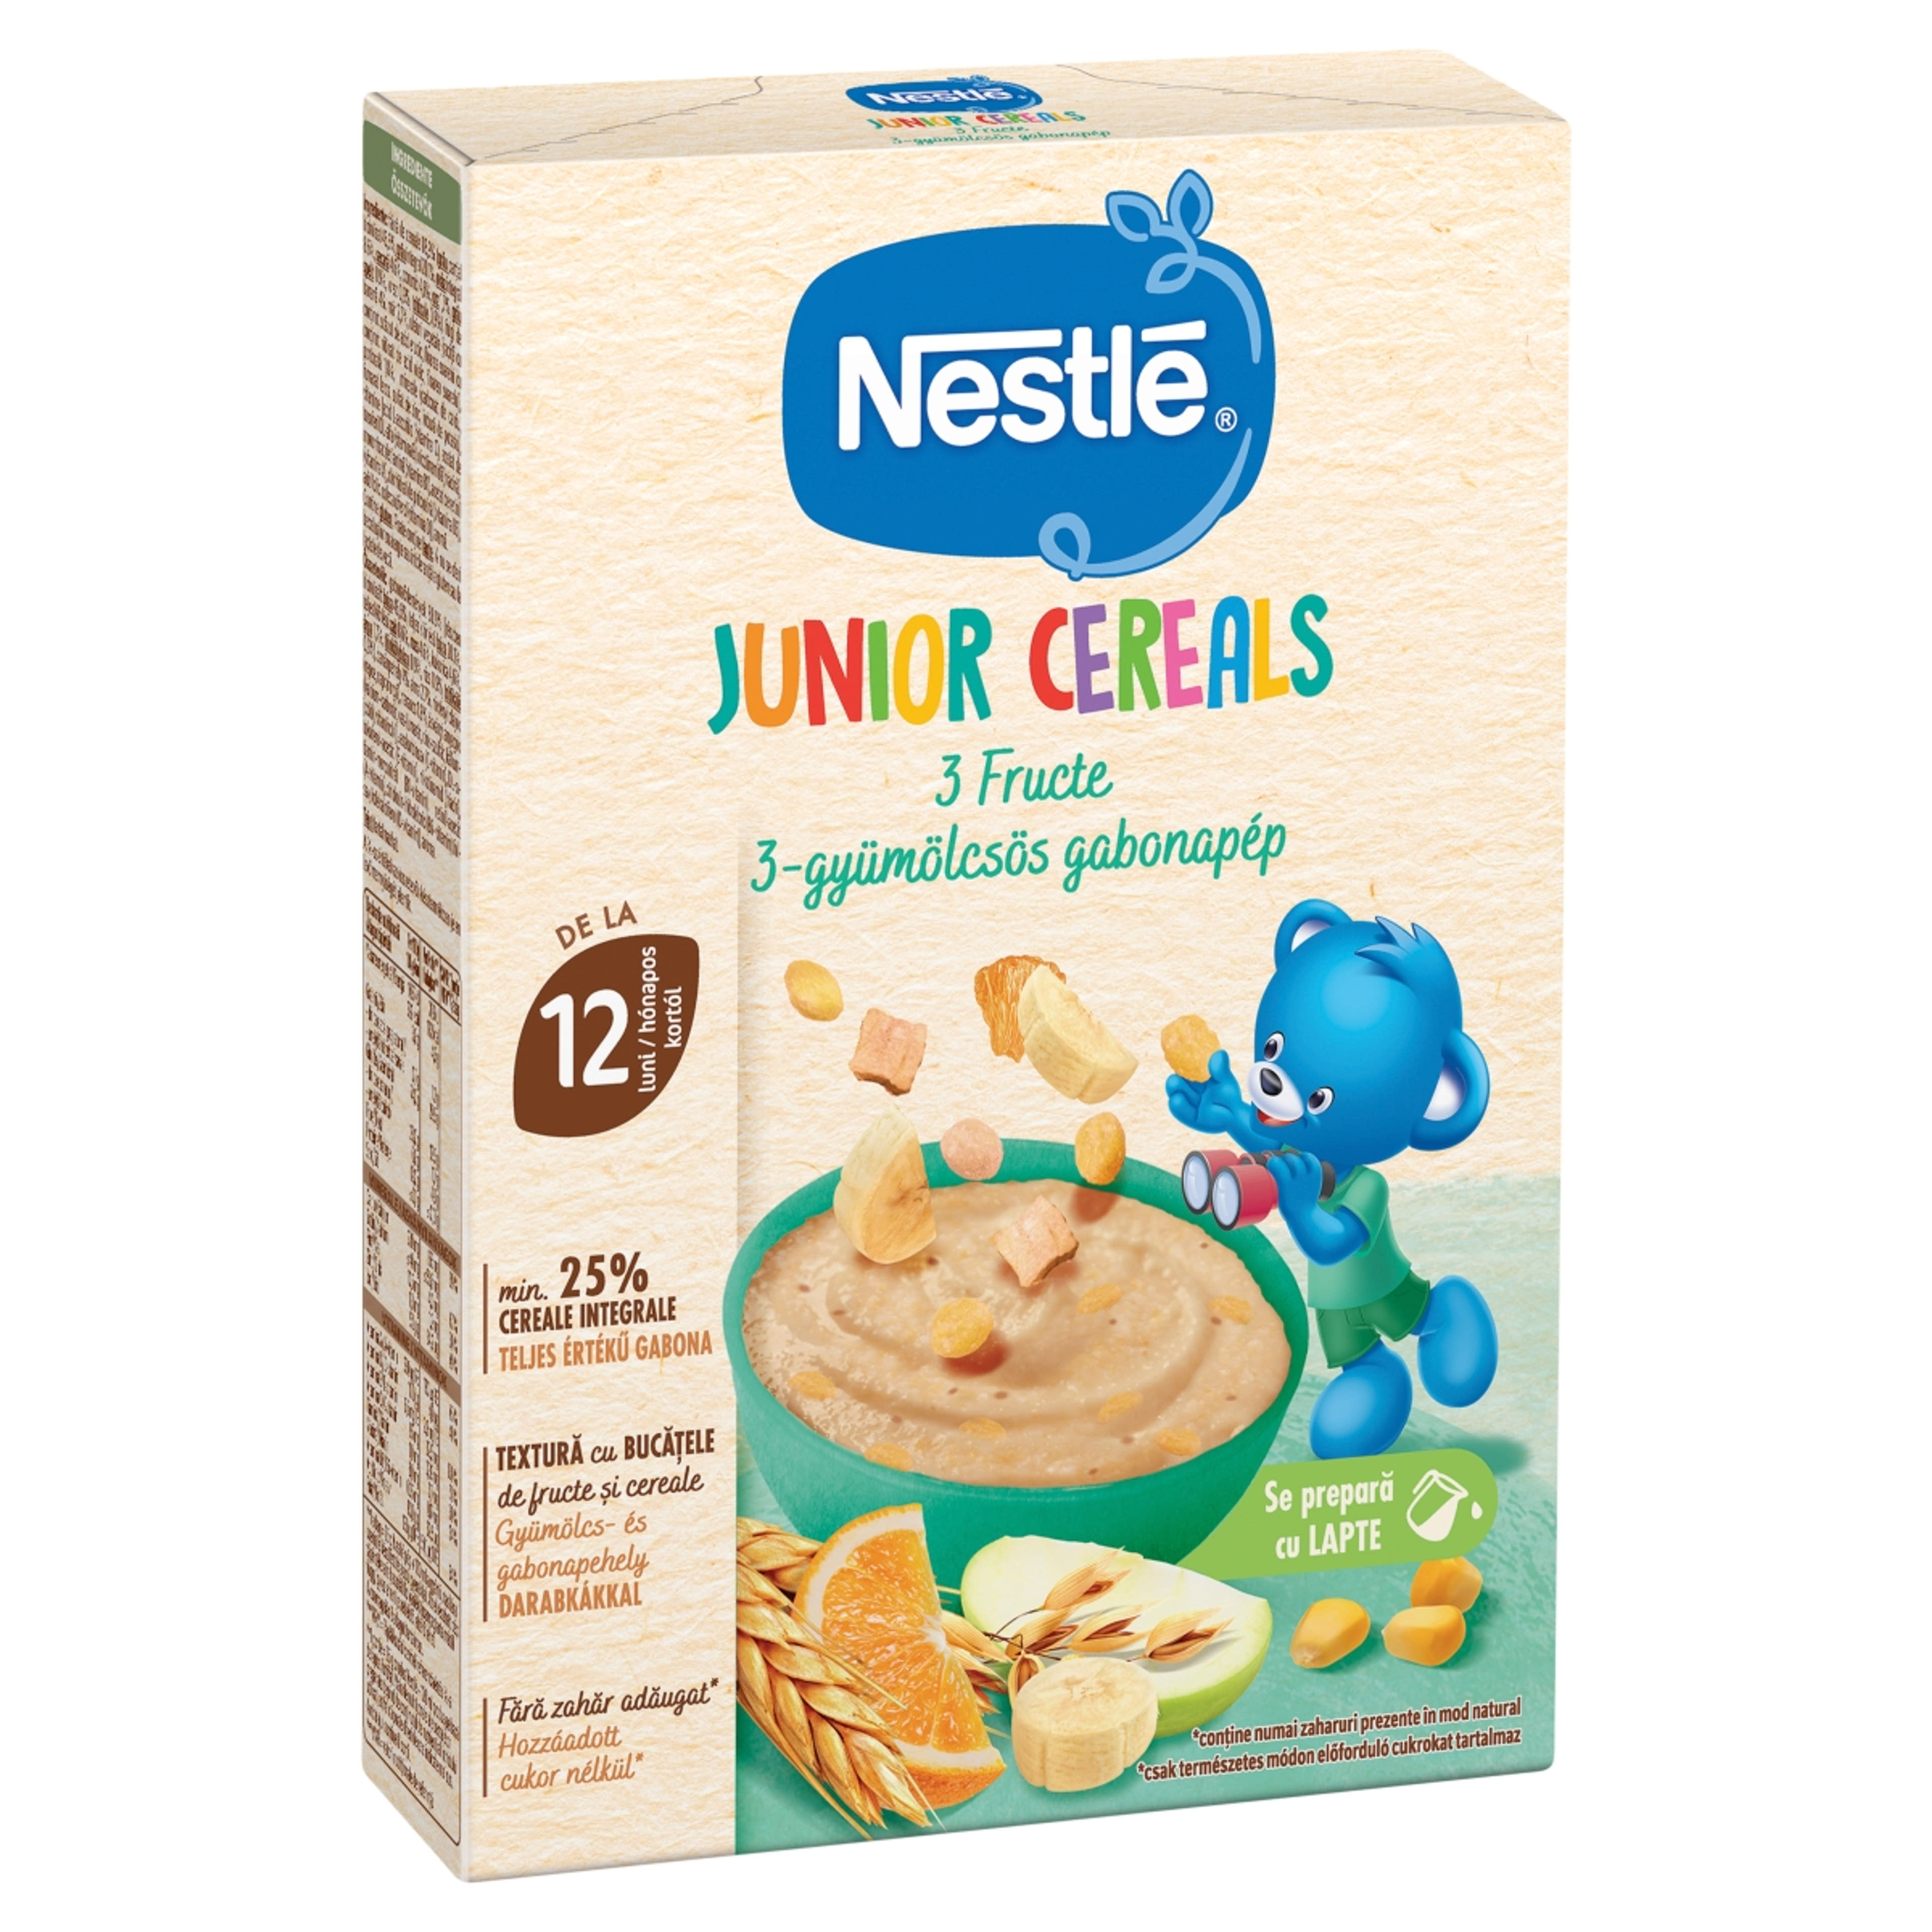 Nestlé Junior Cereals 3-gyümölcsös gabonapép 12 hónapos kortól - 200 g-2